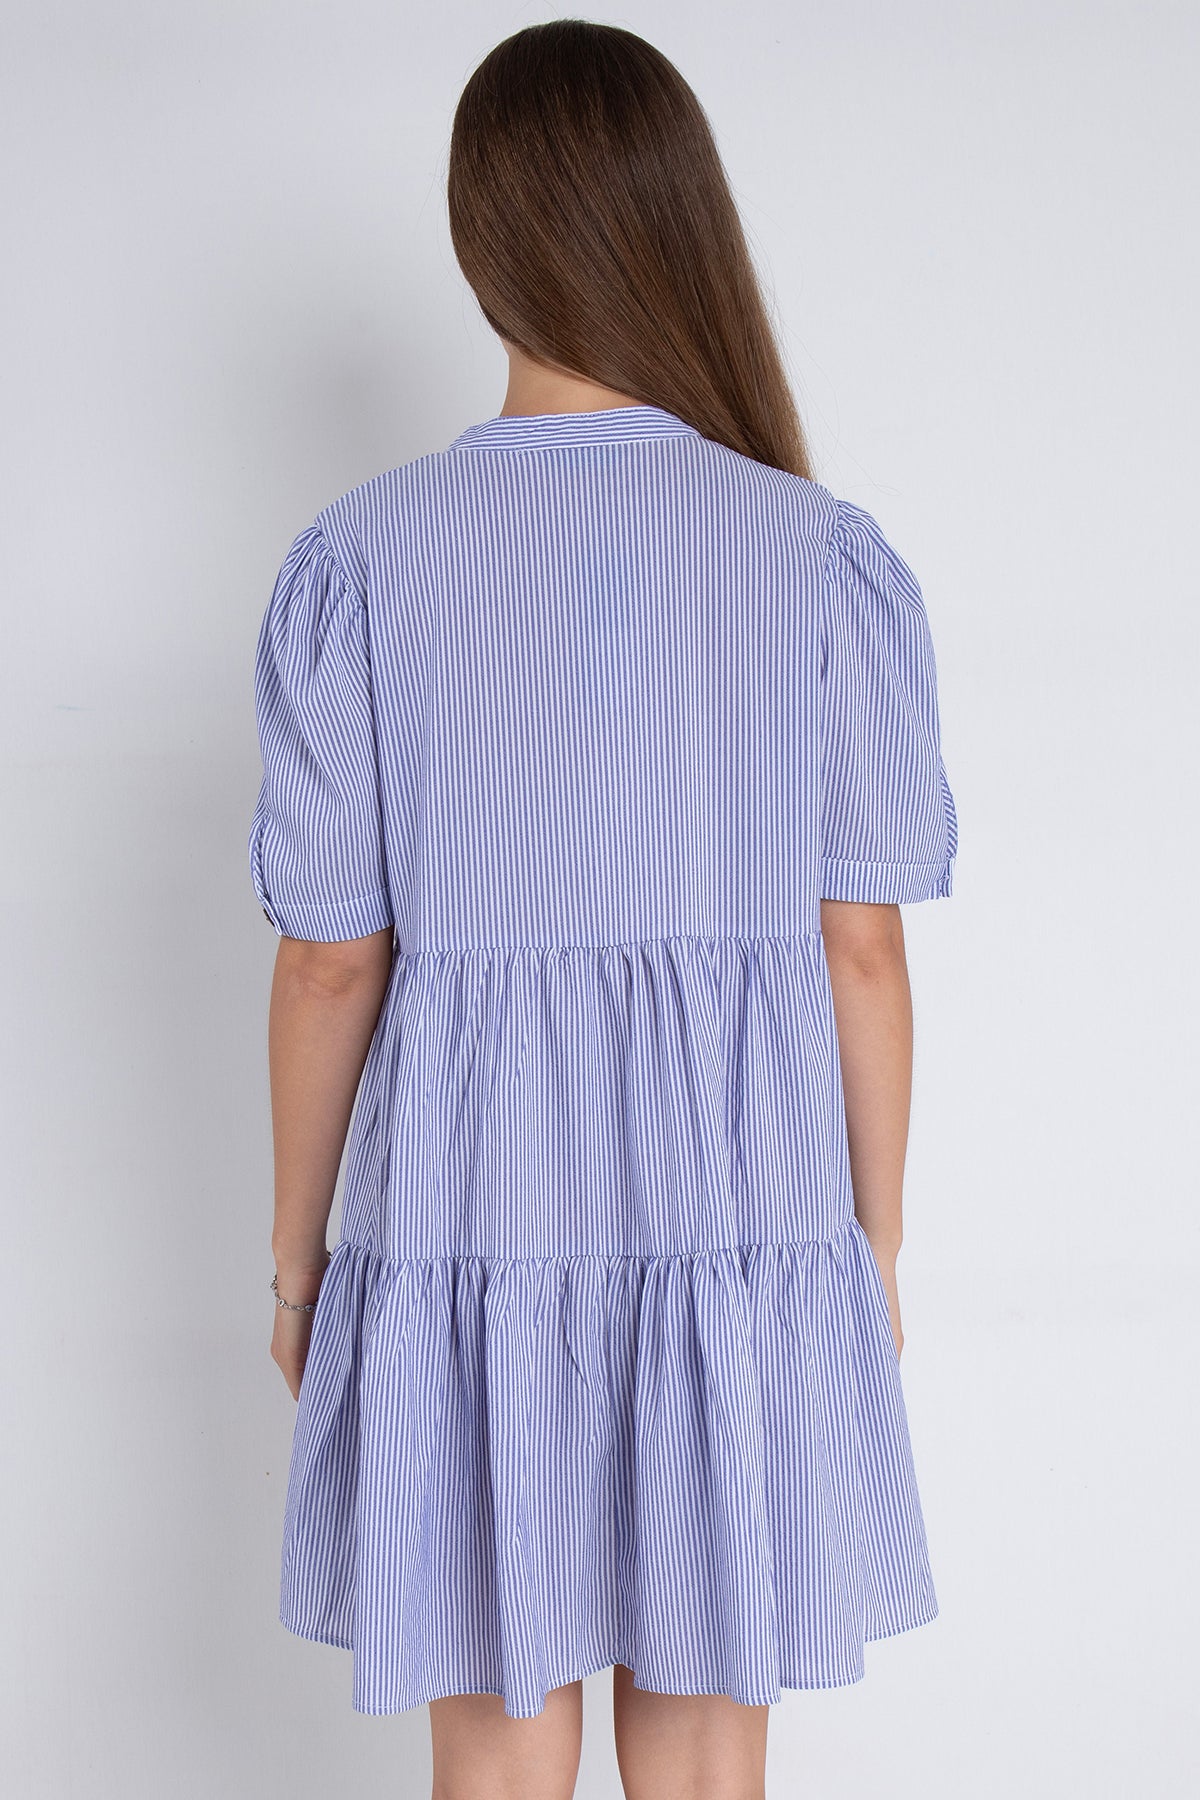 Modano Women's Linen Sleeveless Casual Dress